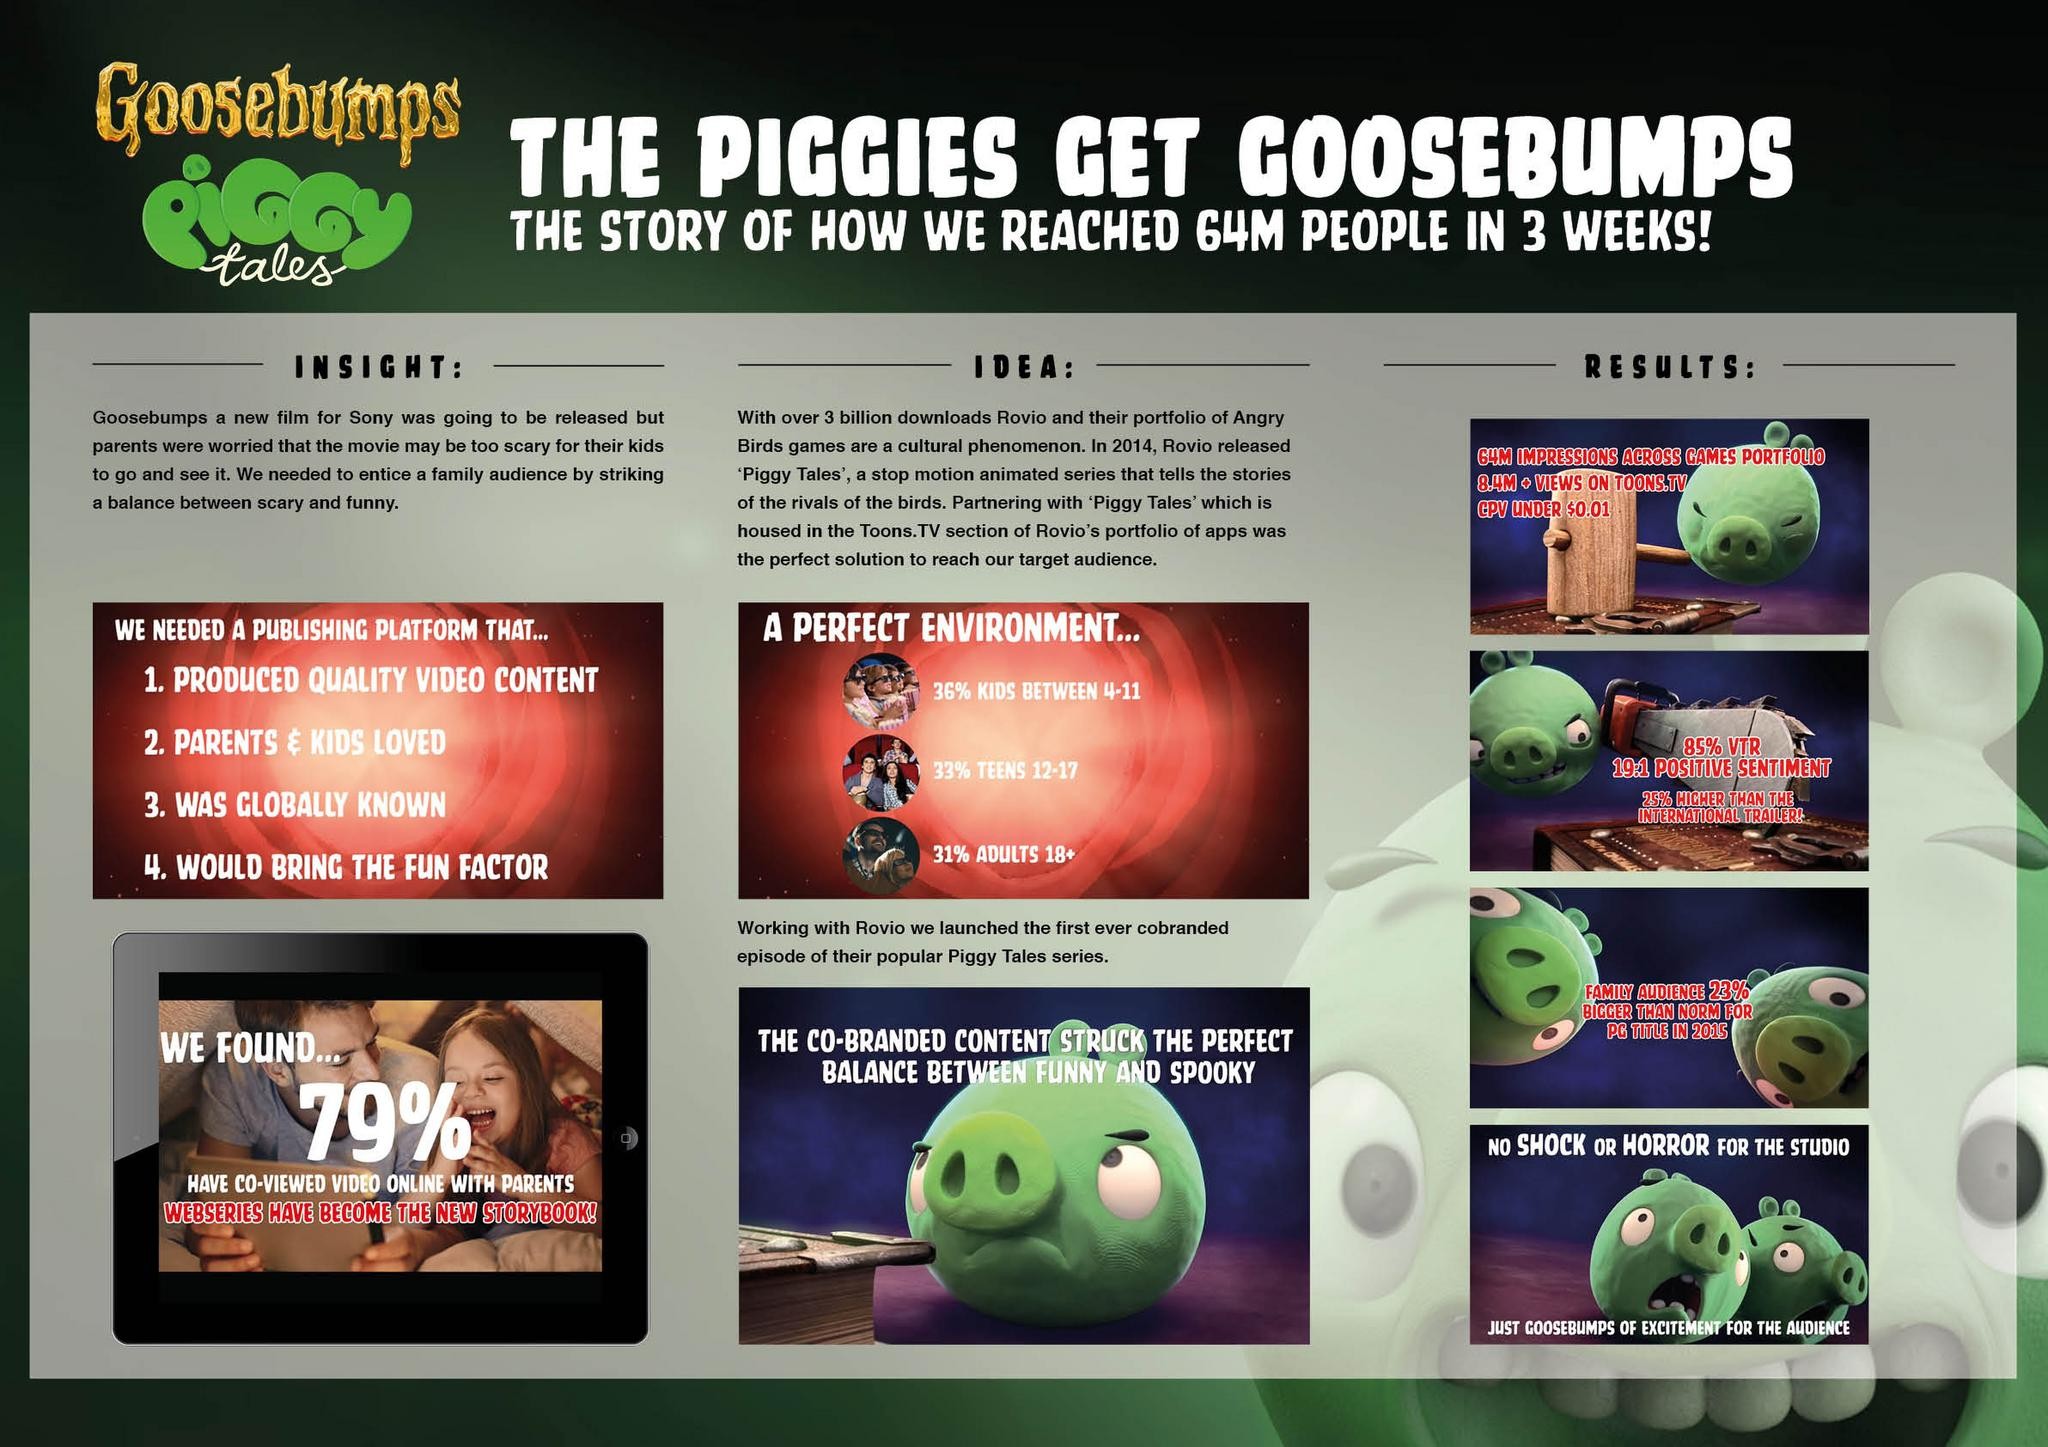 The Piggies Get Goosebumps!